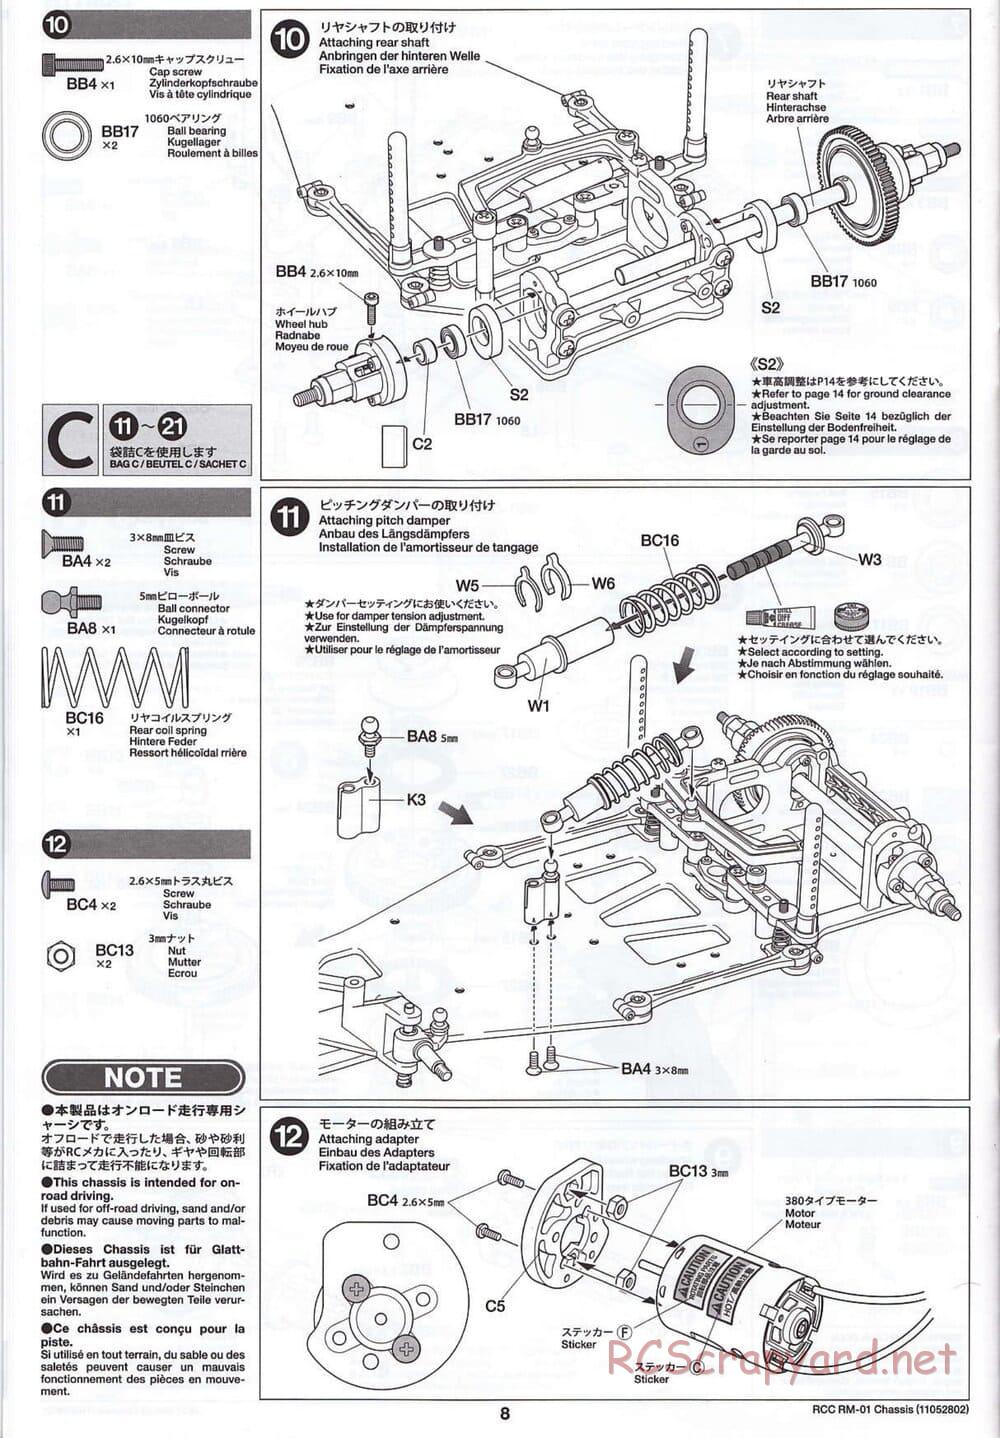 Tamiya - RM-01 Chassis - Manual - Page 8